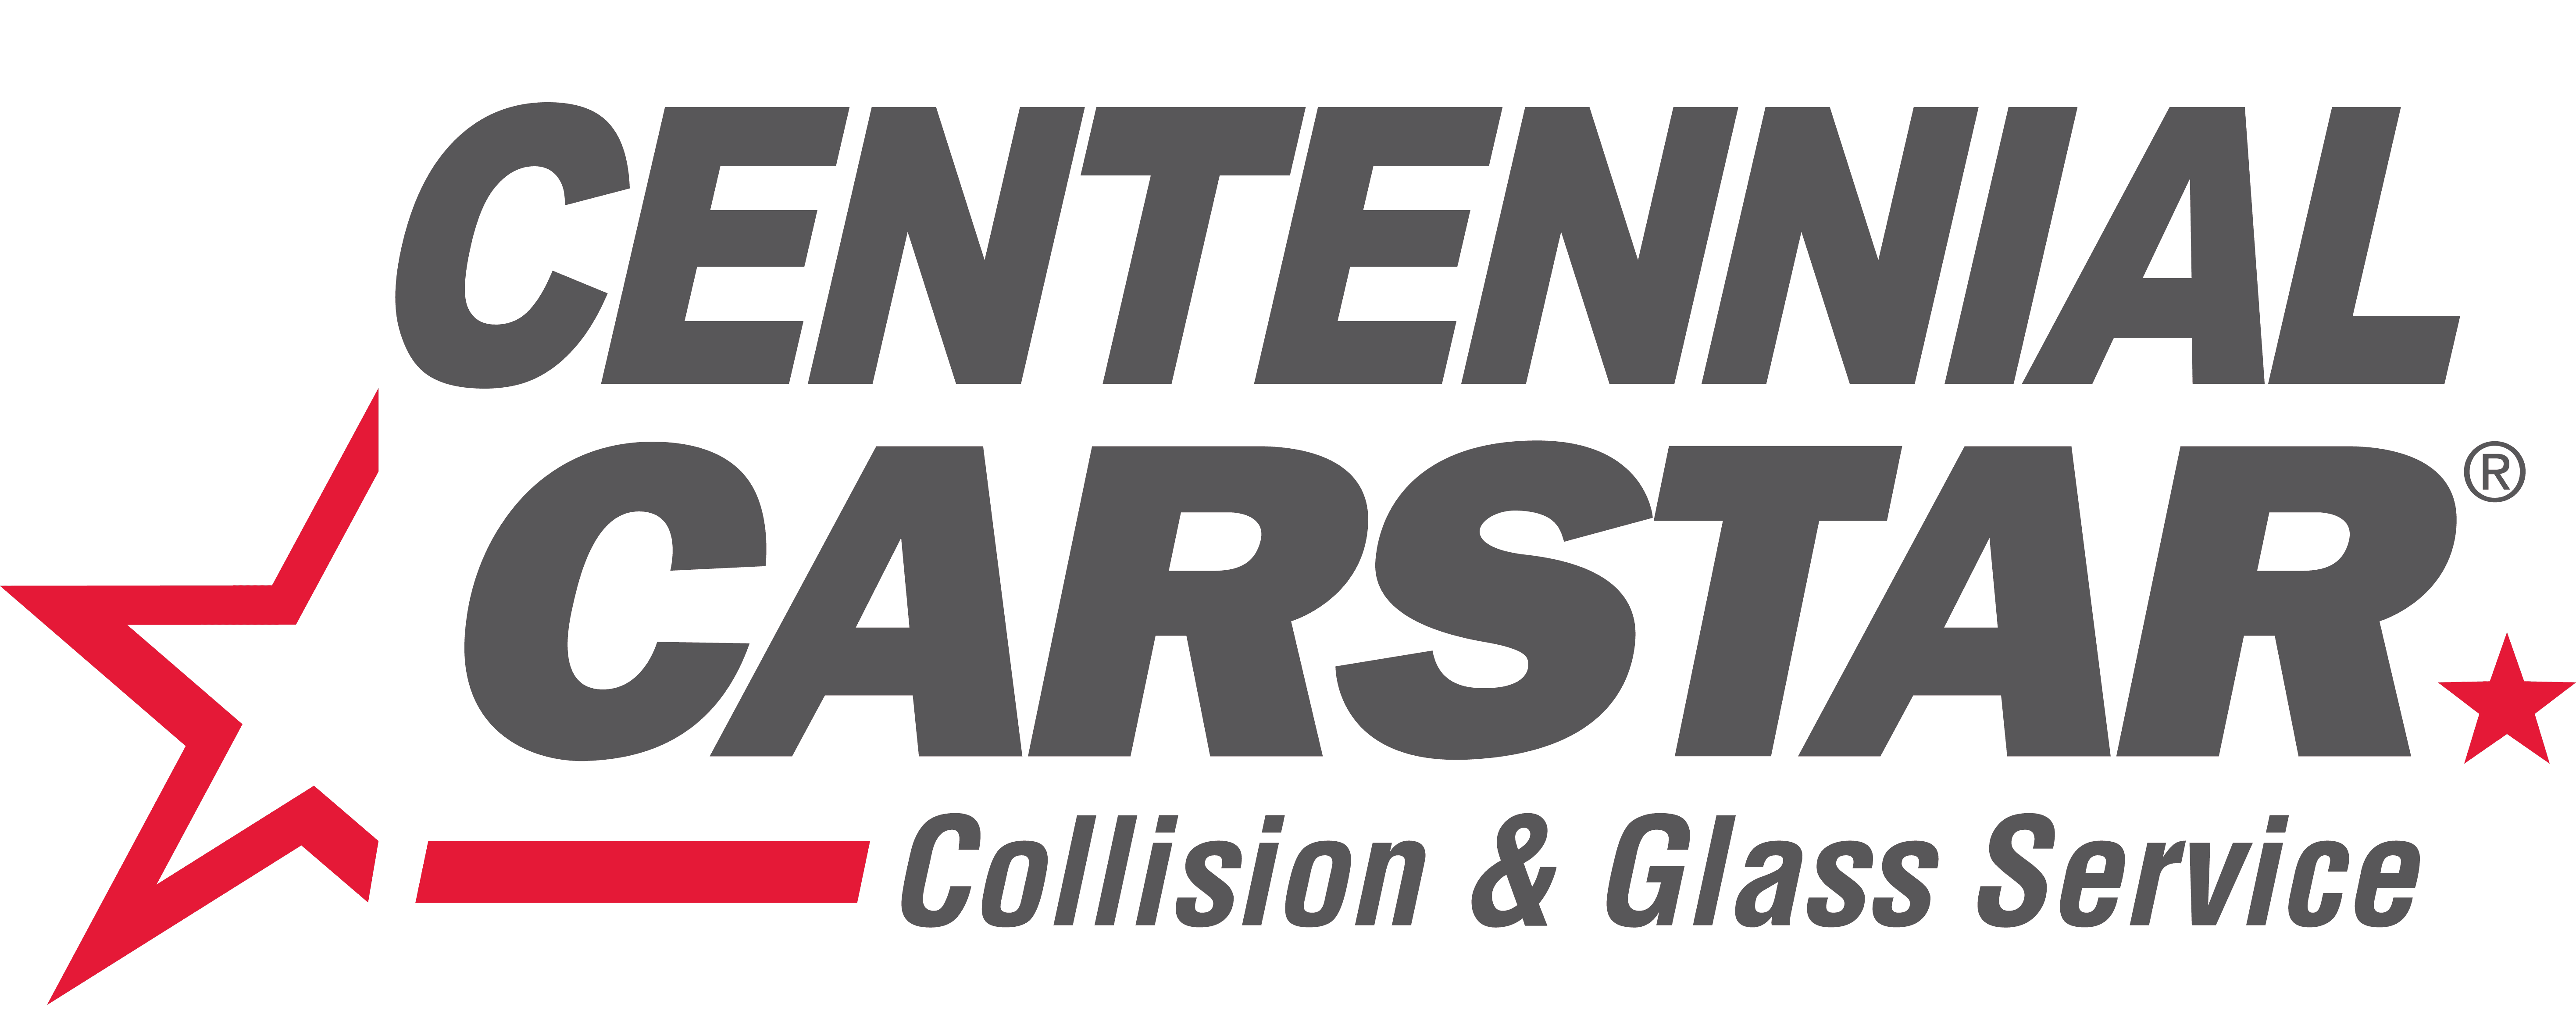 Centennial Carstar Logo